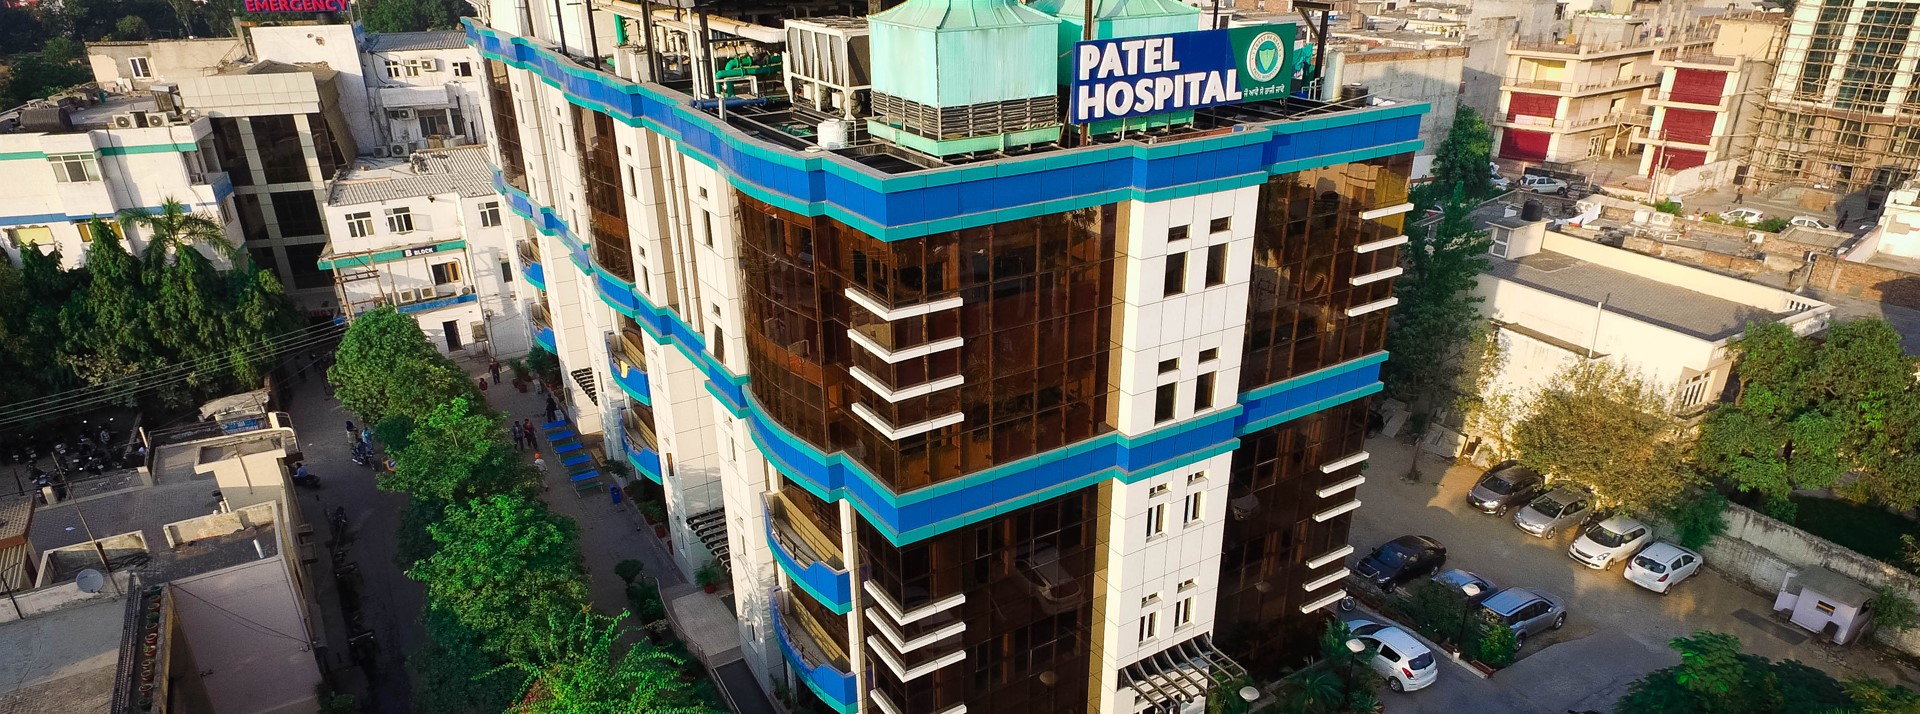 Patel Hospital Pvt Ltd Medical Services | Hospitals